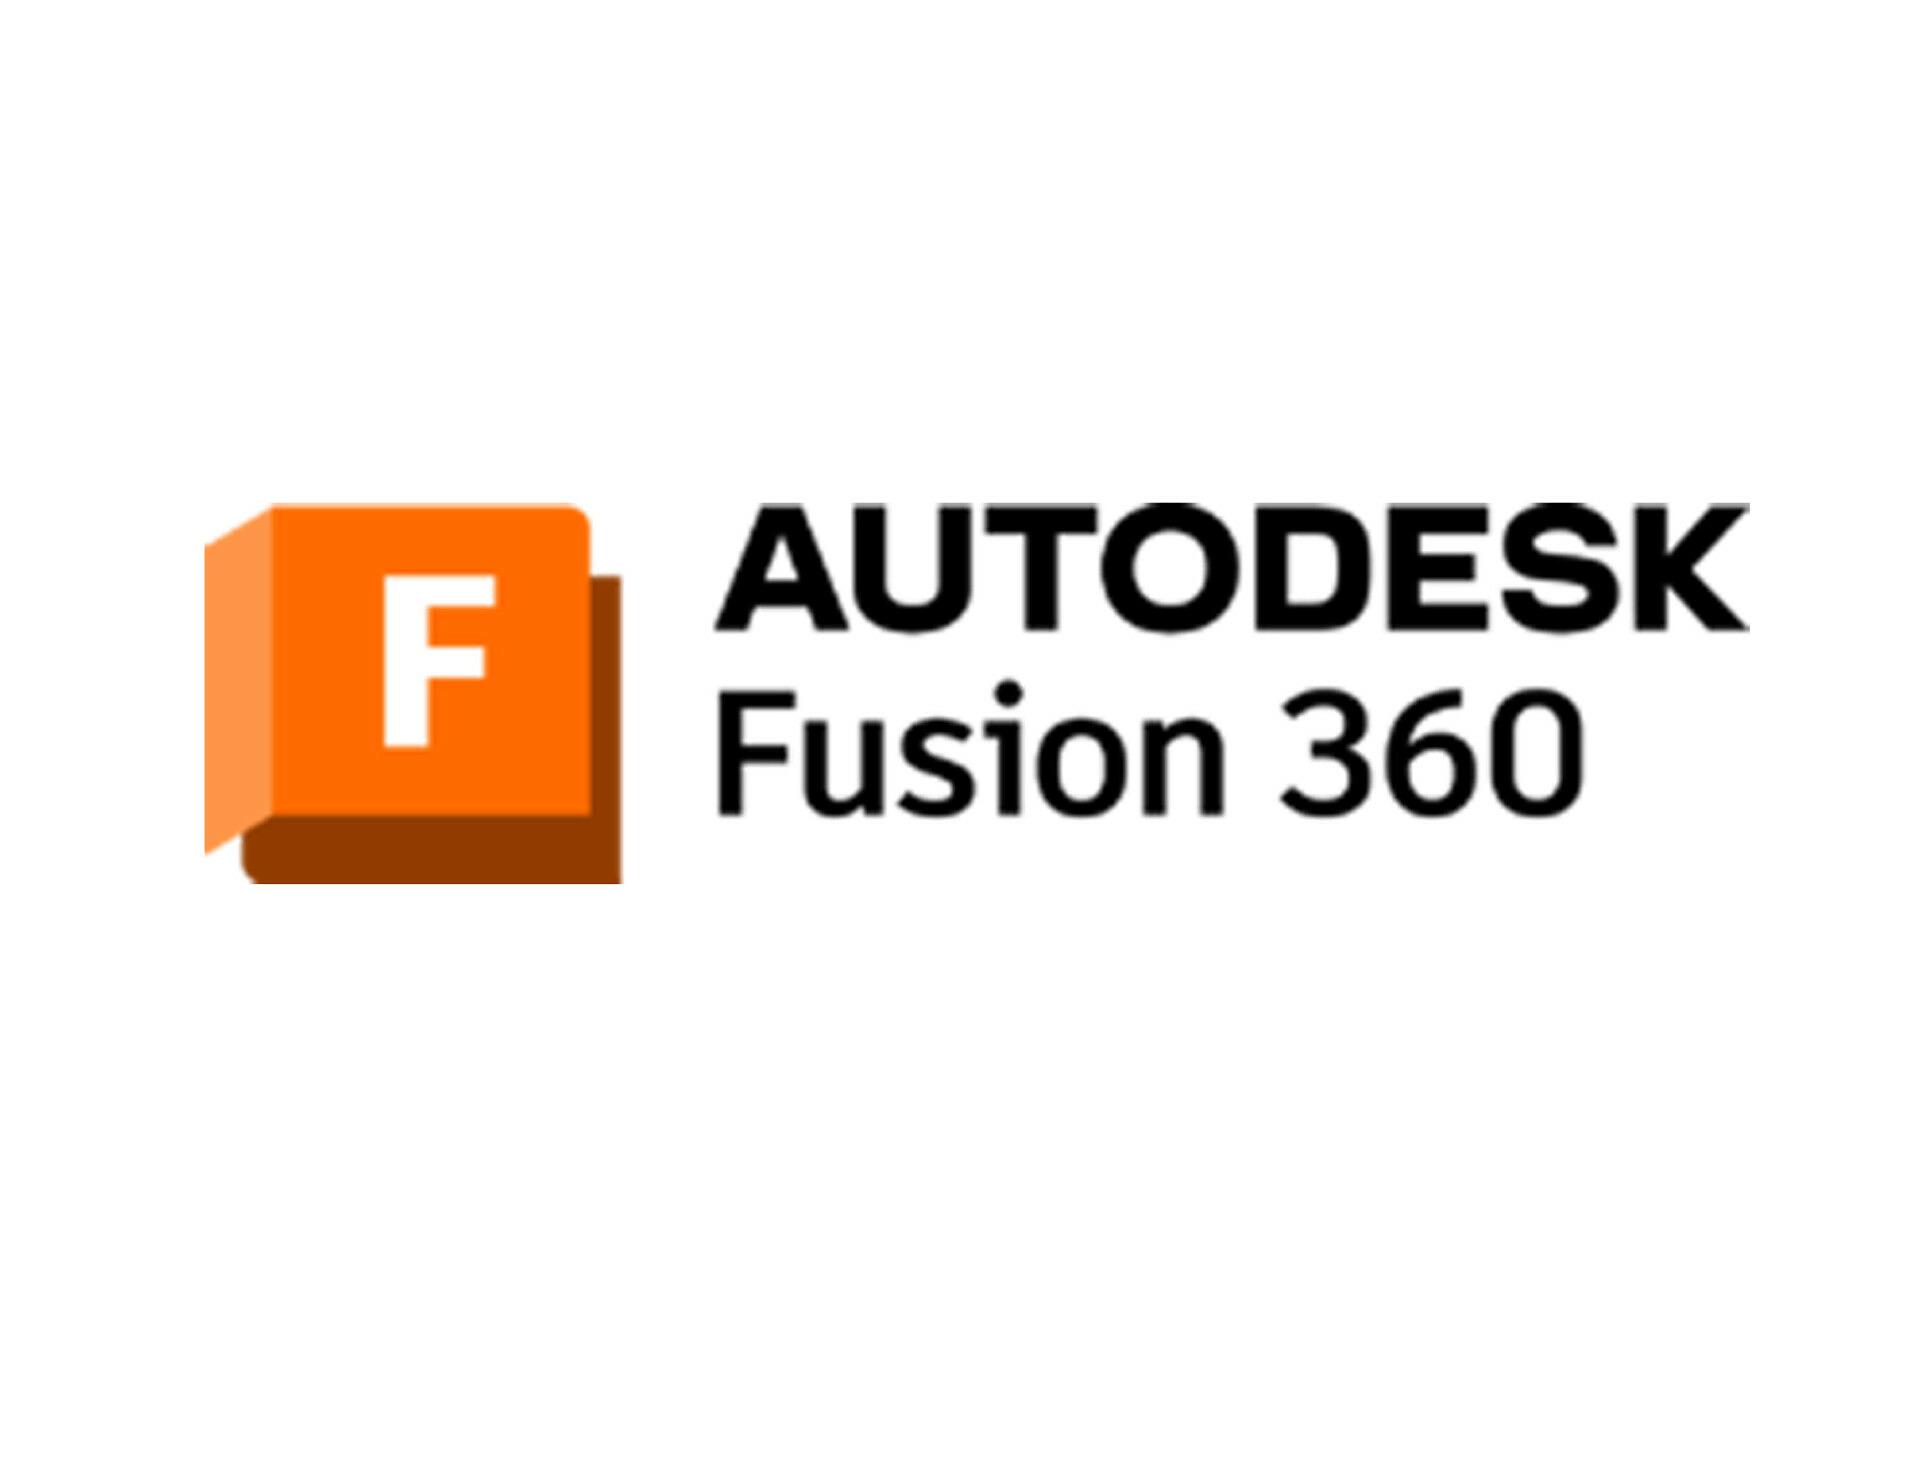 fusion360-zdjecie-produktu.jpg